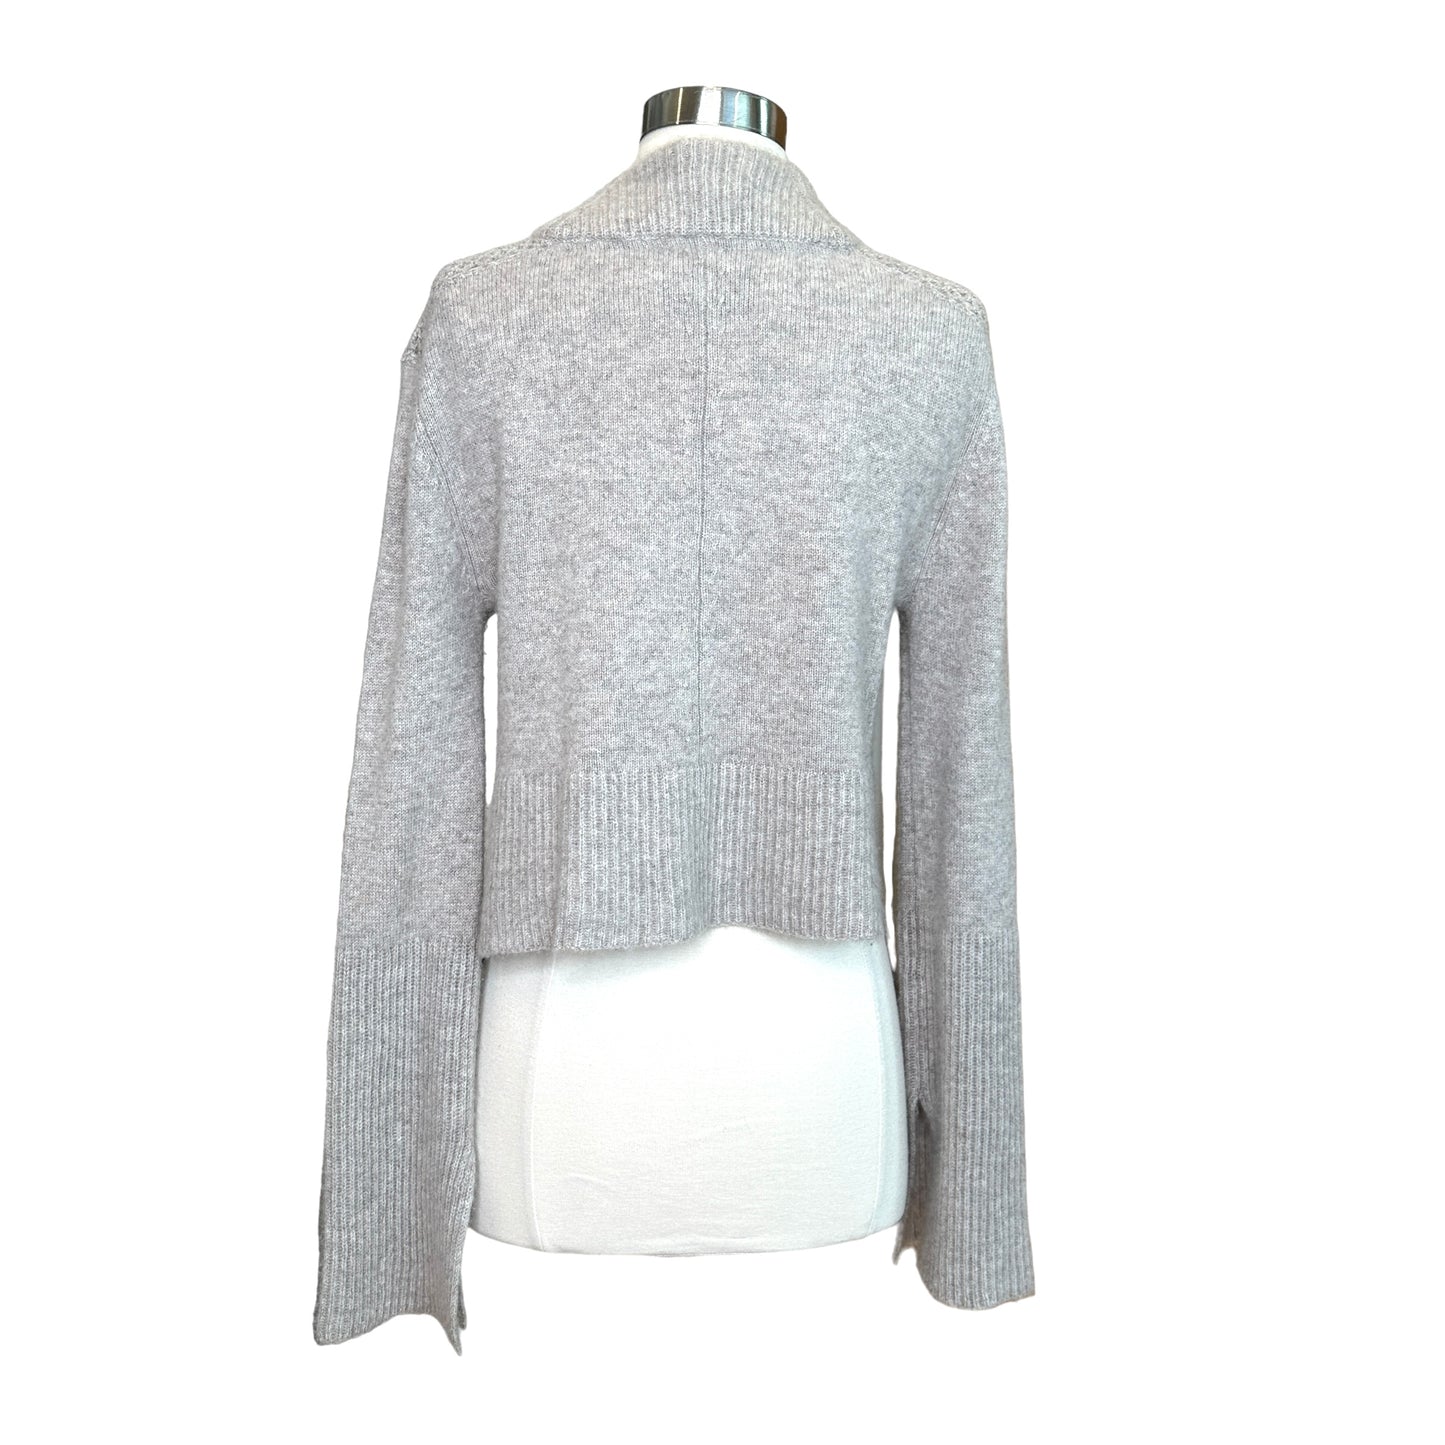 Light Grey Cashmere Sweater - XS